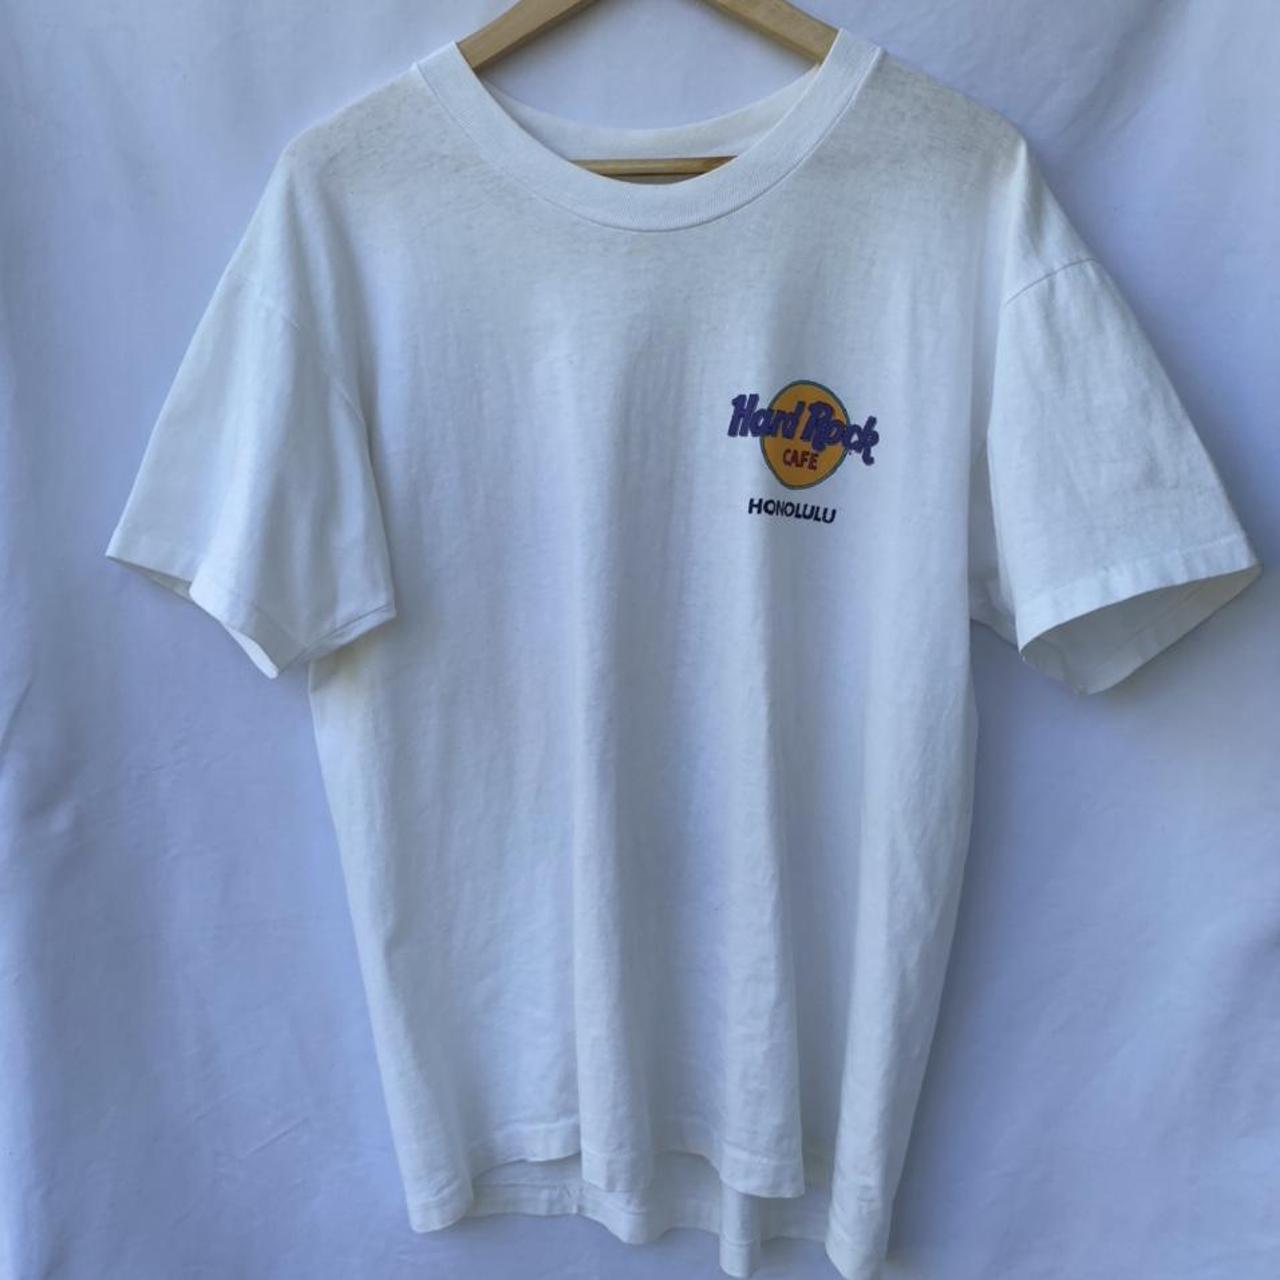 Vintage Hard Rock Cafe Honolulu white t-shirt - tee... - Depop